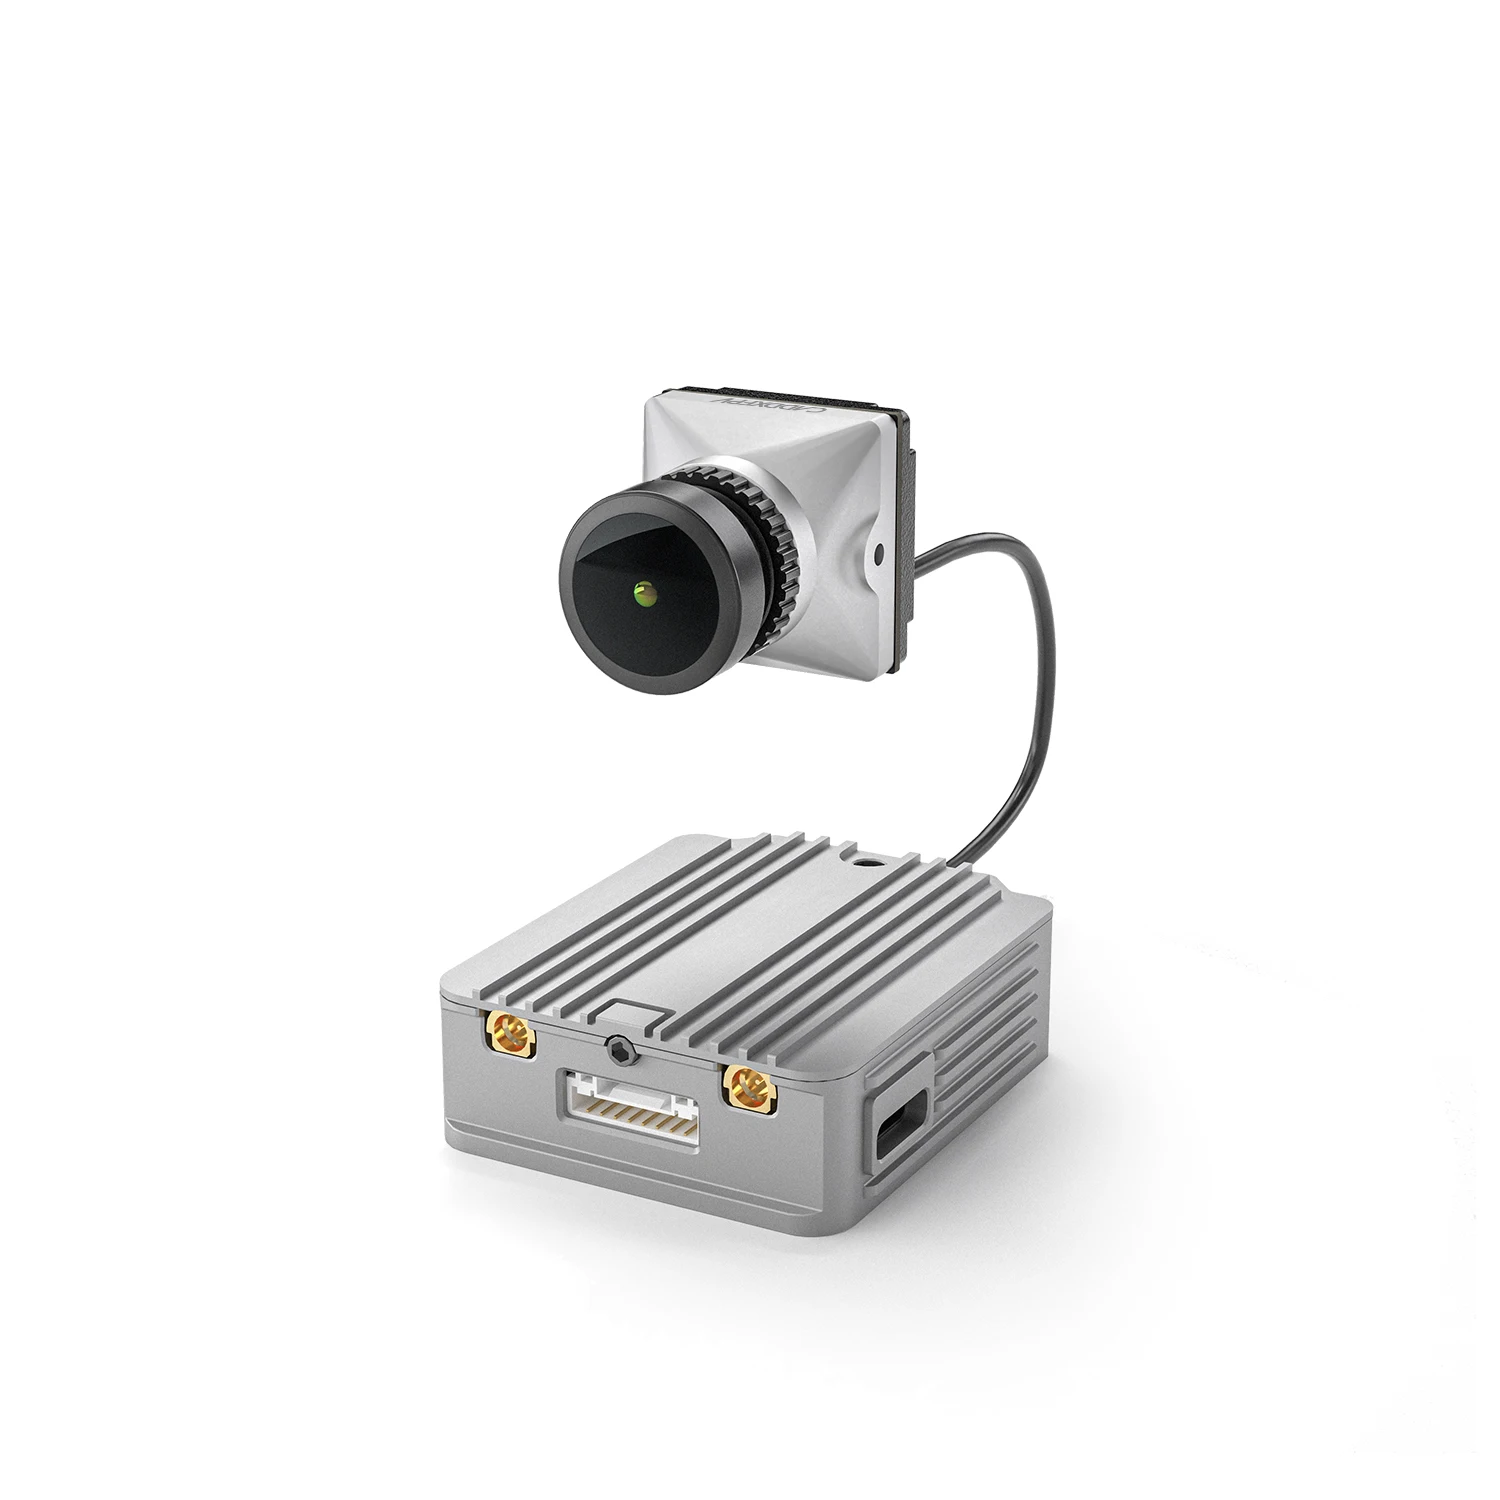 Caddx DJI FPV Air Unit Digital Image Transmission with Camera for DJI FPV Goggles Remote Controller VS Polar Vista Kit